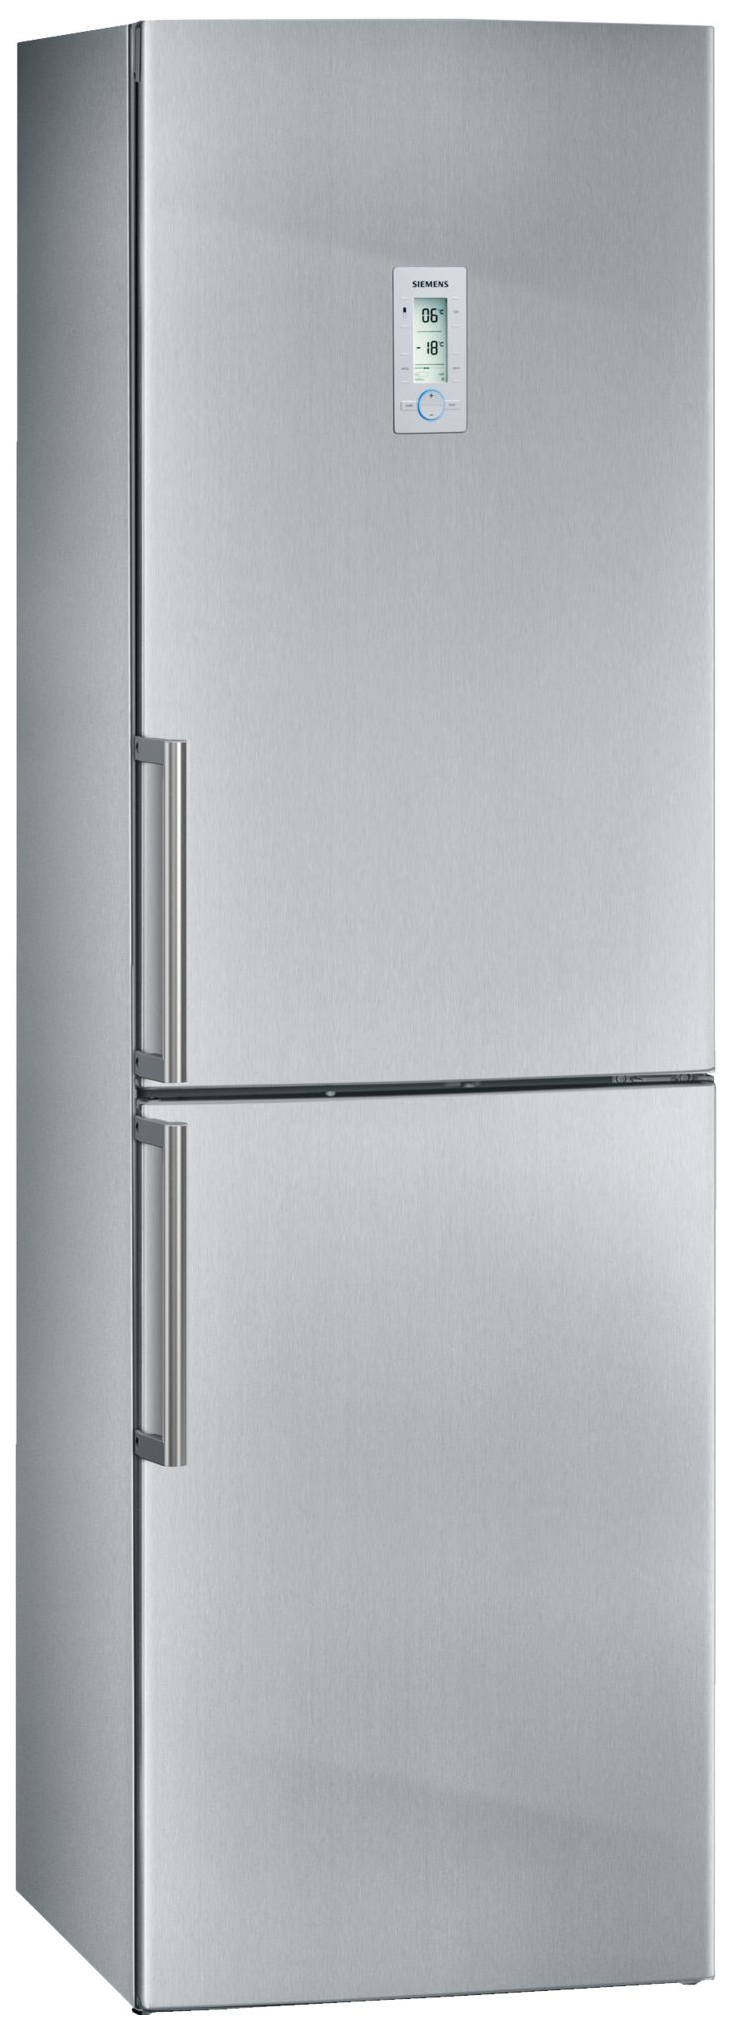 Холодильник Siemens KG39NAI26R серебристый аккумулятор для siemens s30852 d1751 x1 v30145 k1310 x382